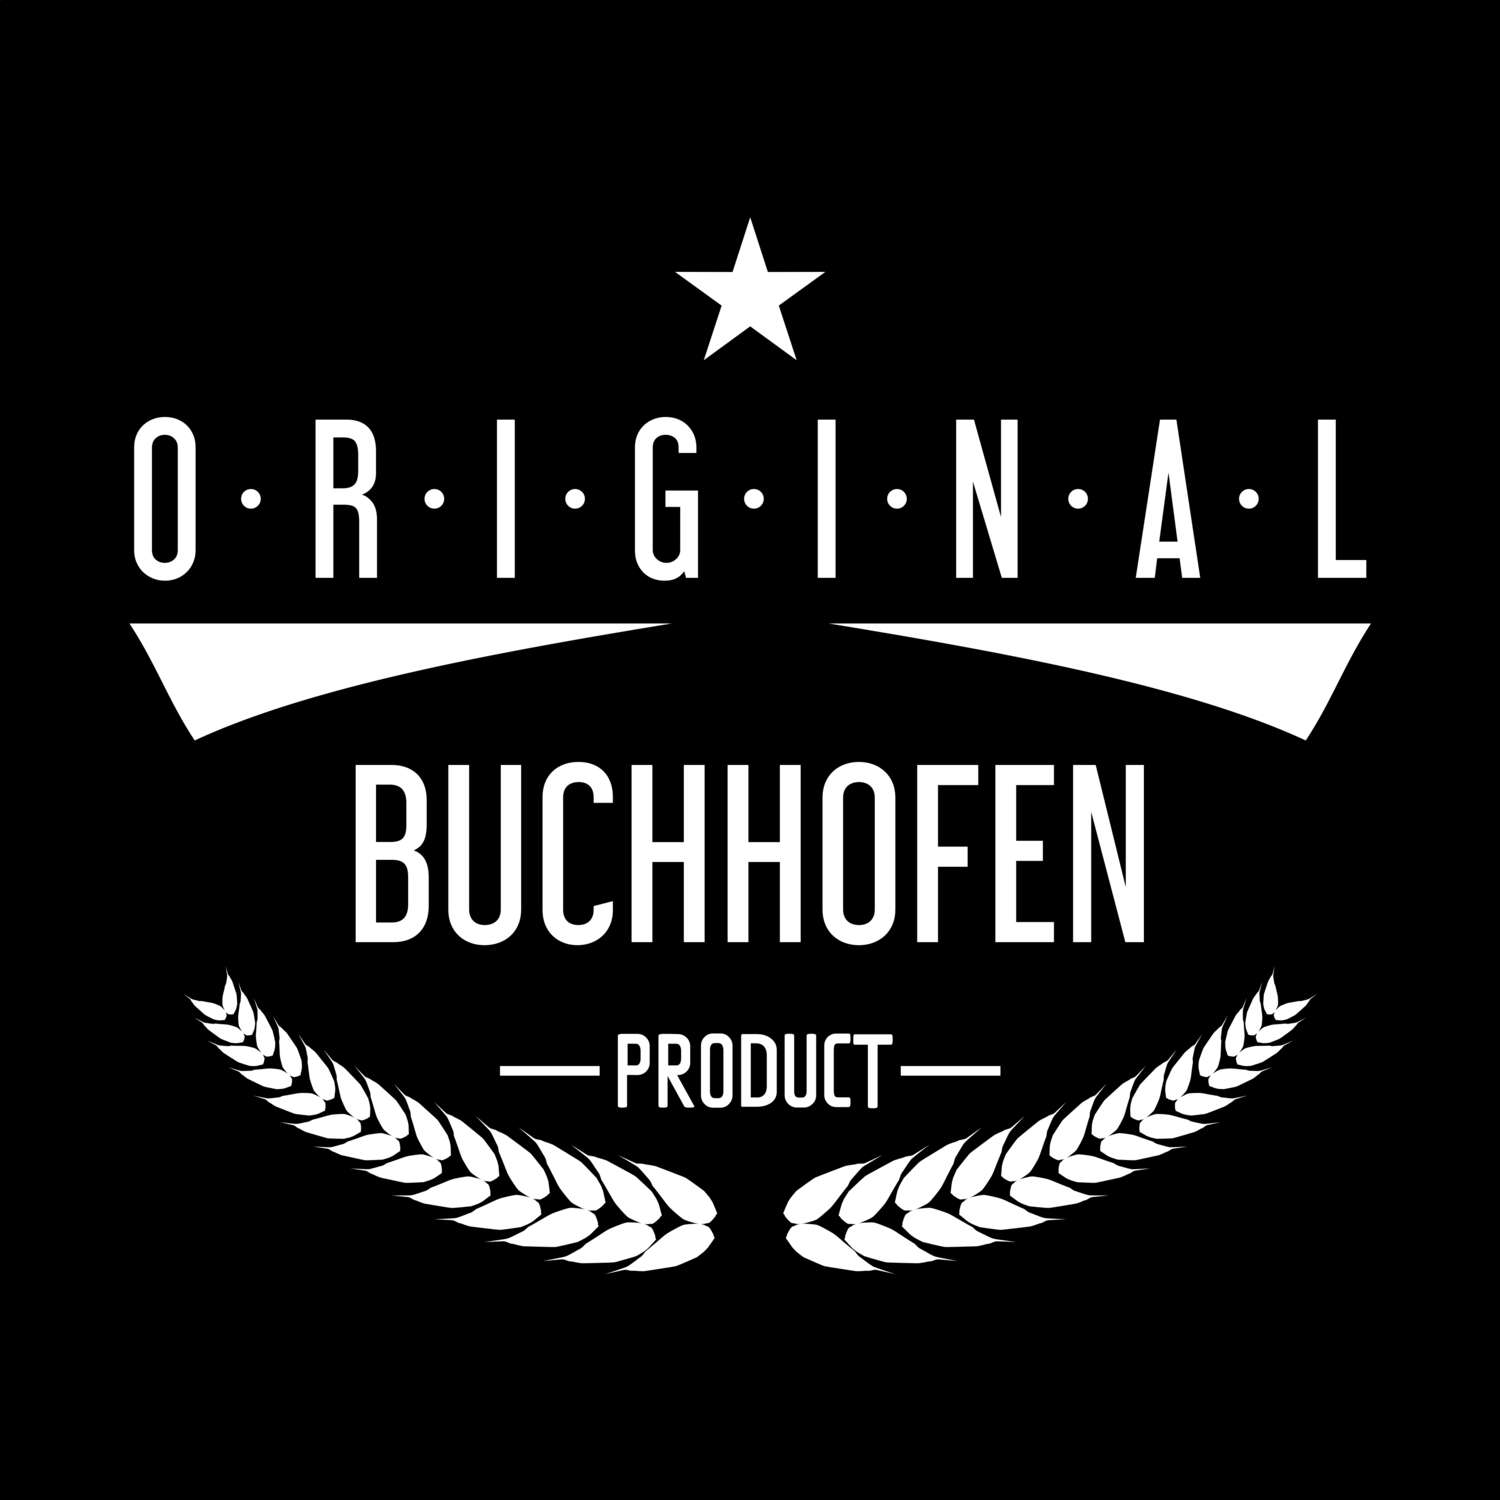 Buchhofen T-Shirt »Original Product«